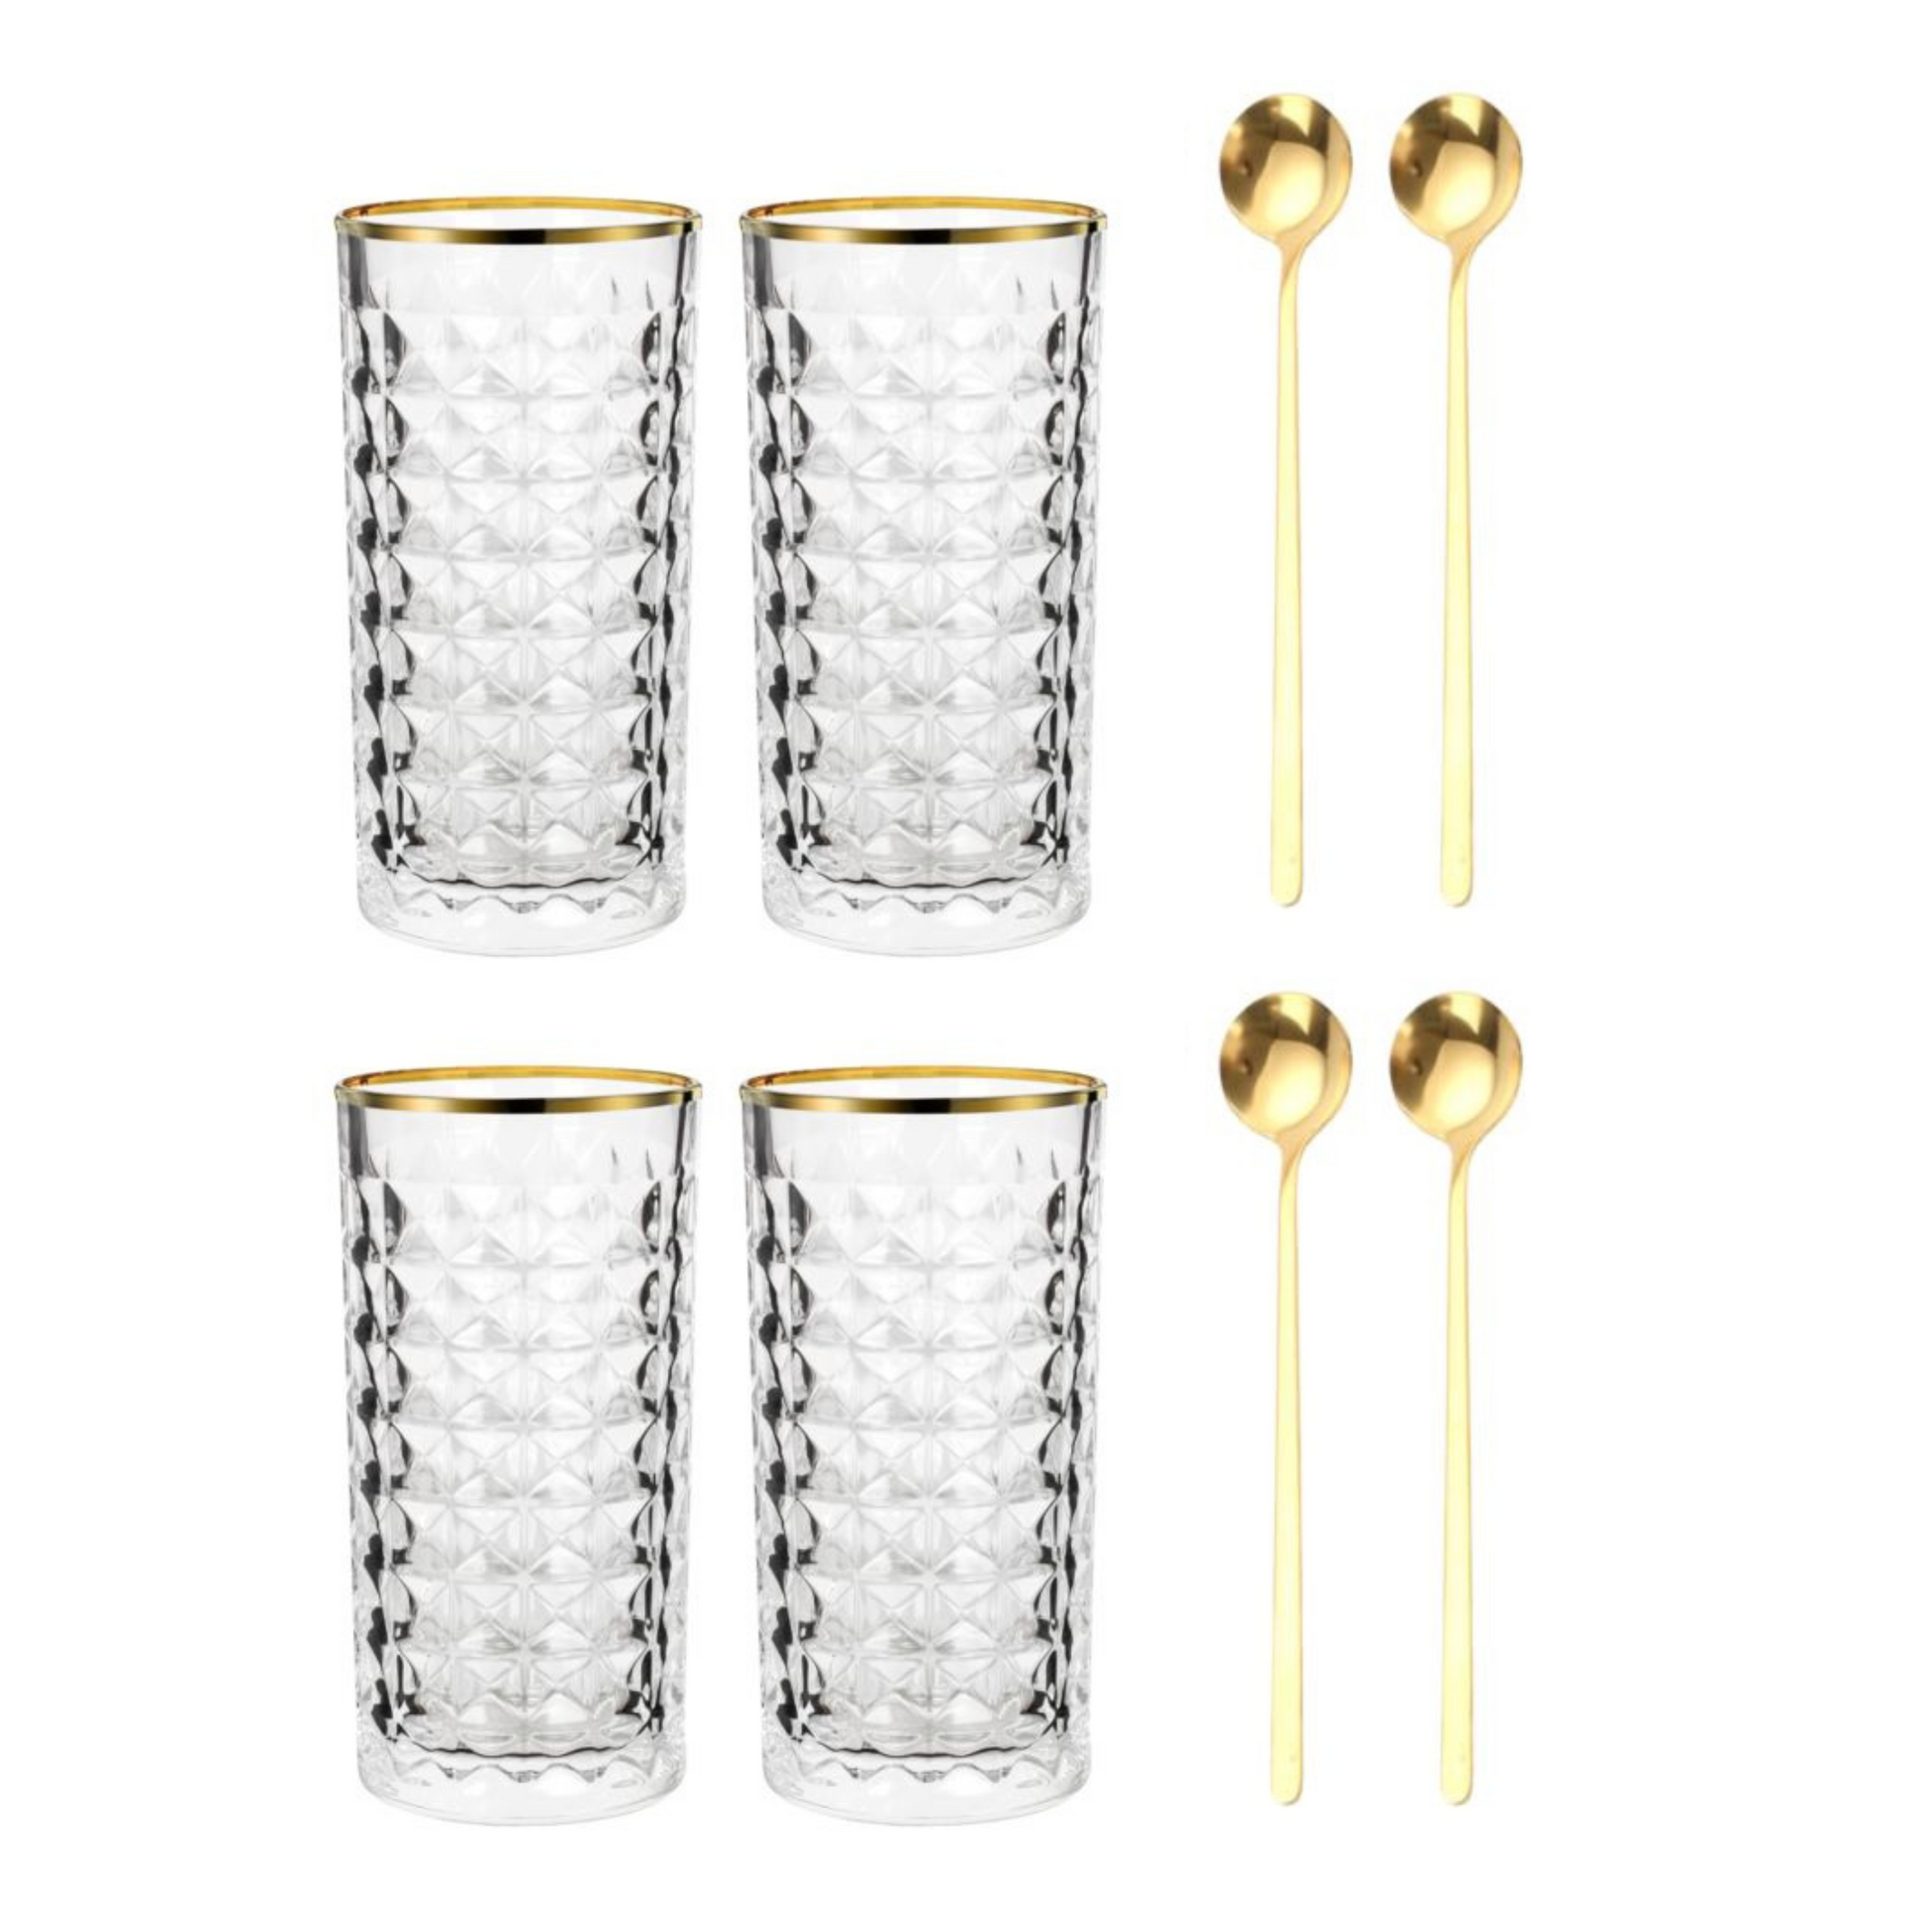 Kristall Latte Macchiato Gläser gold Rand goldene Löffel 4er-Set